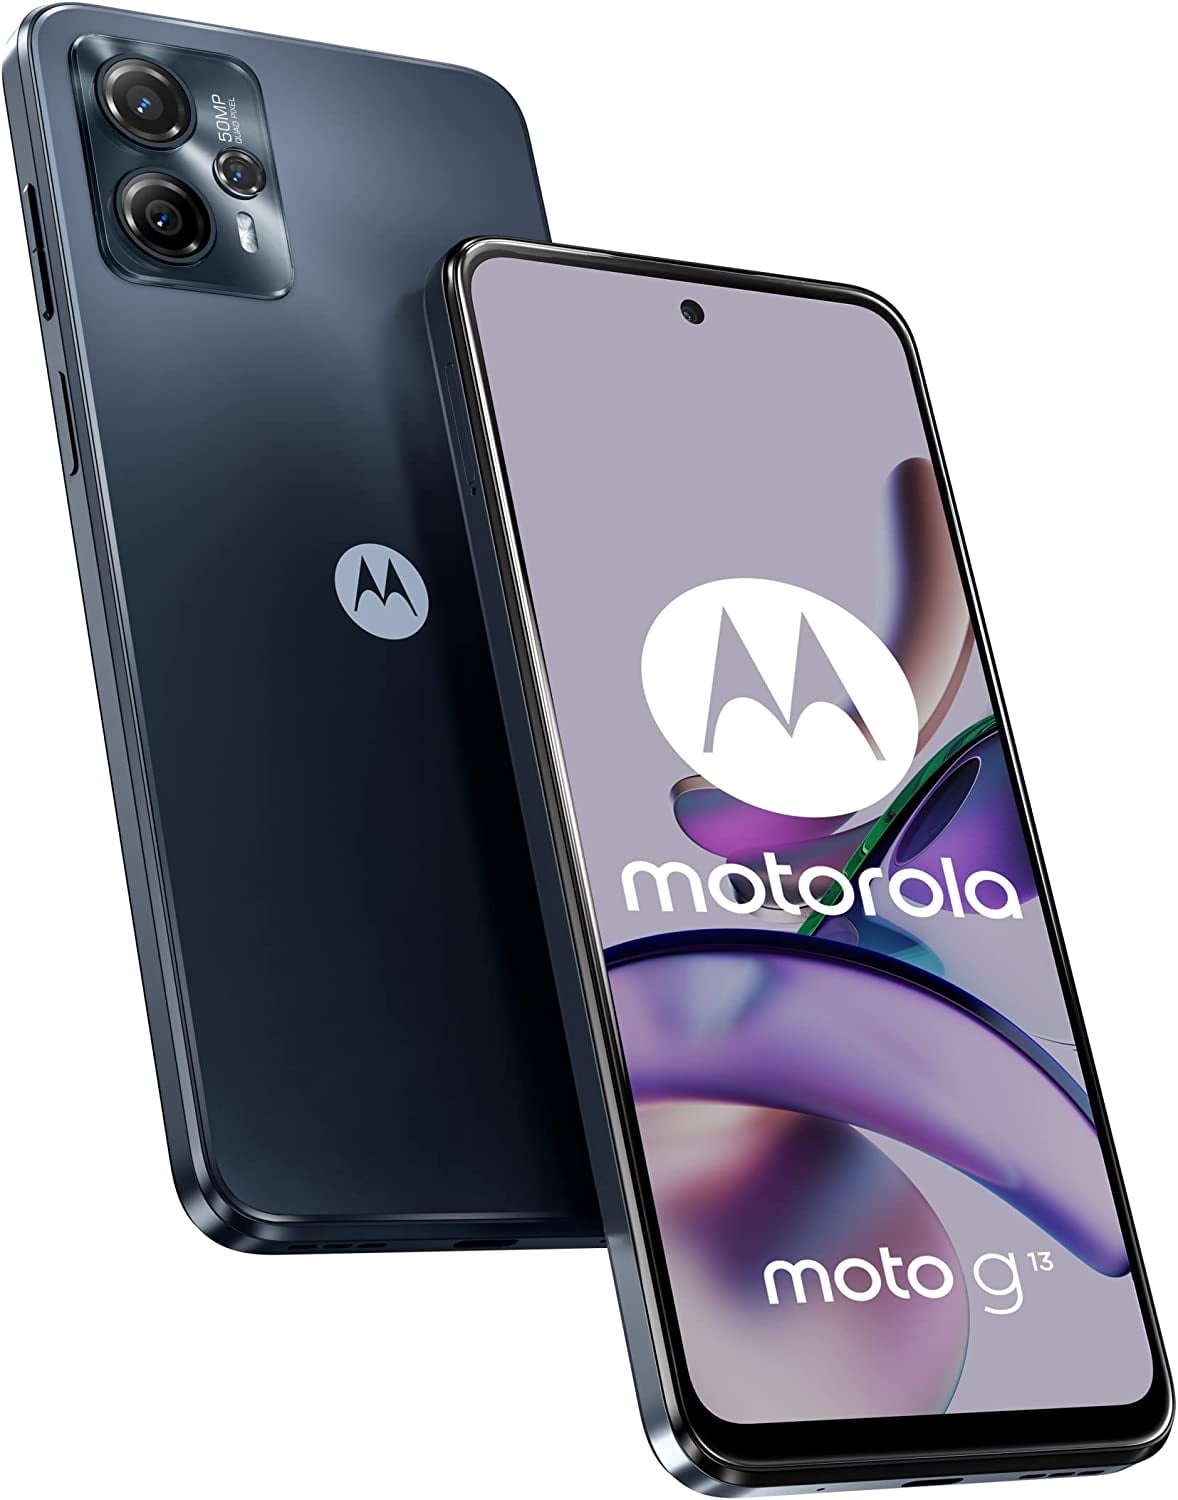 Motorola Moto G13 Dual SIM 128GB ROM + 4GB RAM Factory Unlocked 4G  Smartphone (Matte Charcoal) - International Version